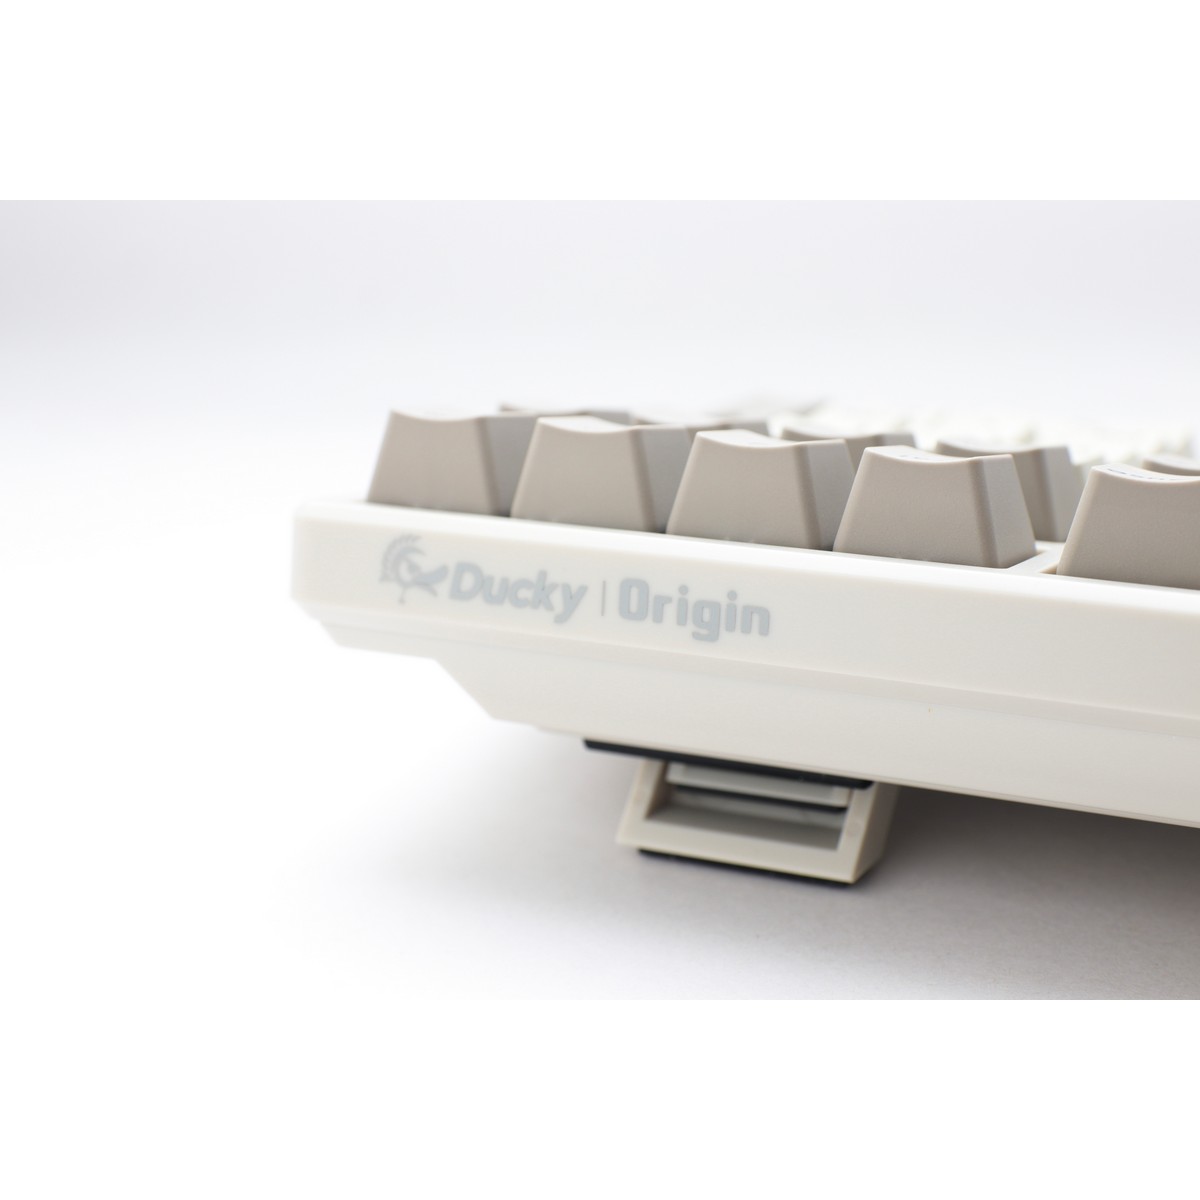 Ducky - Ducky Origin USB Mechanical Gaming Keyboard Cherry MX Blue - Vintage UK Layout